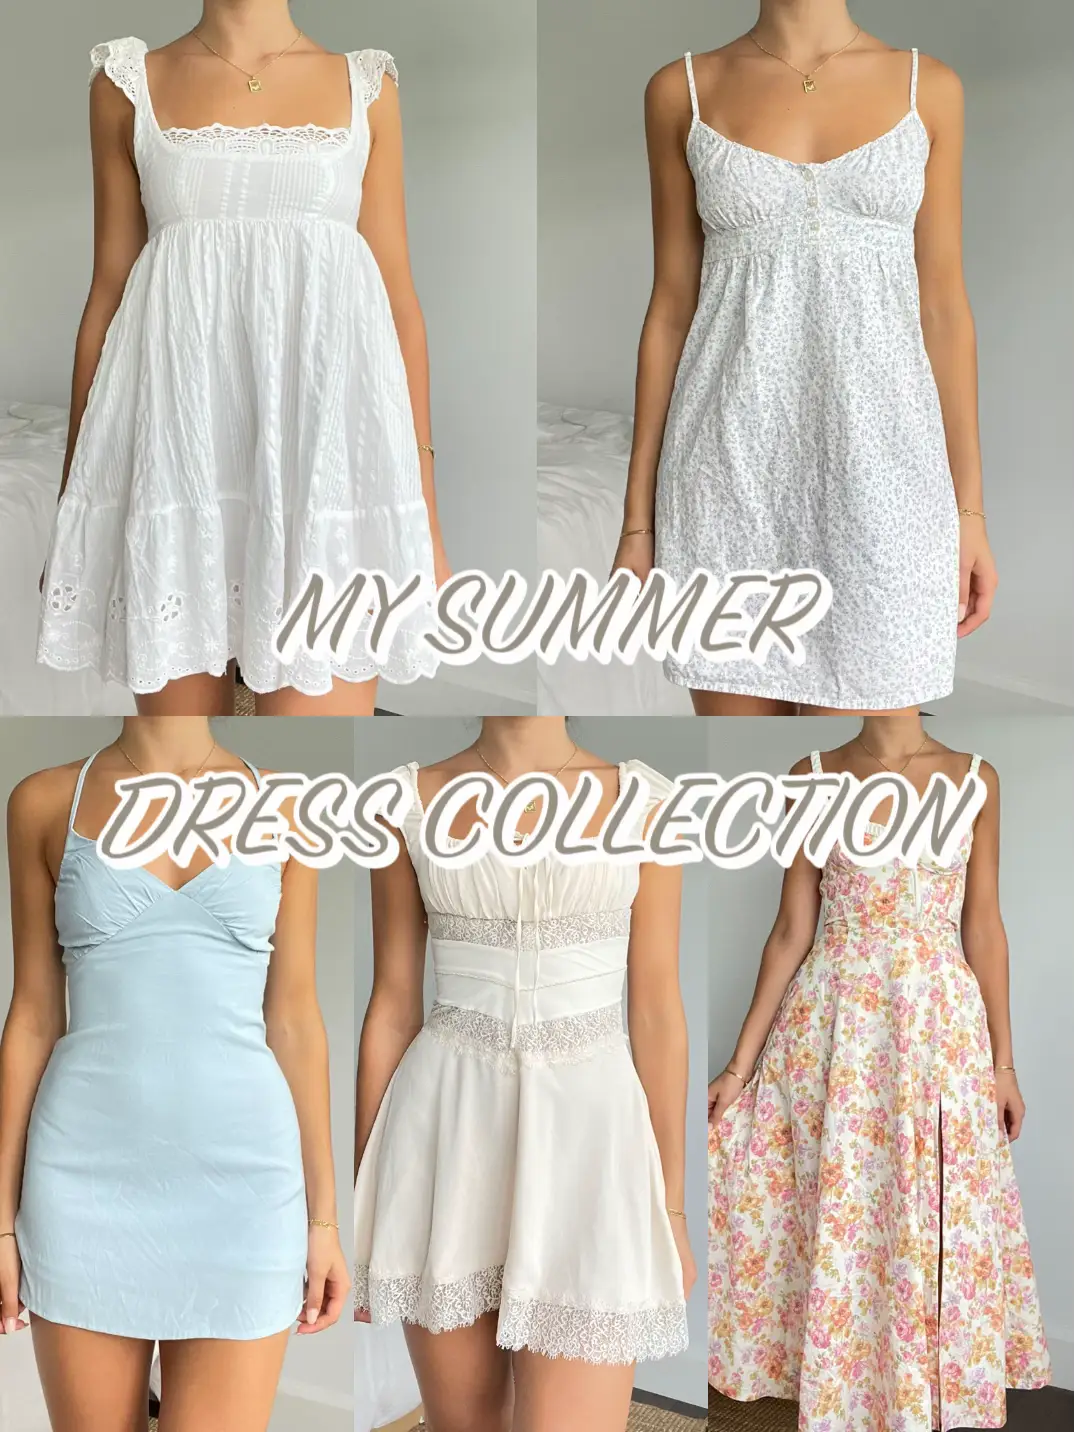 Flowy summer dresses - Lemon8 Search